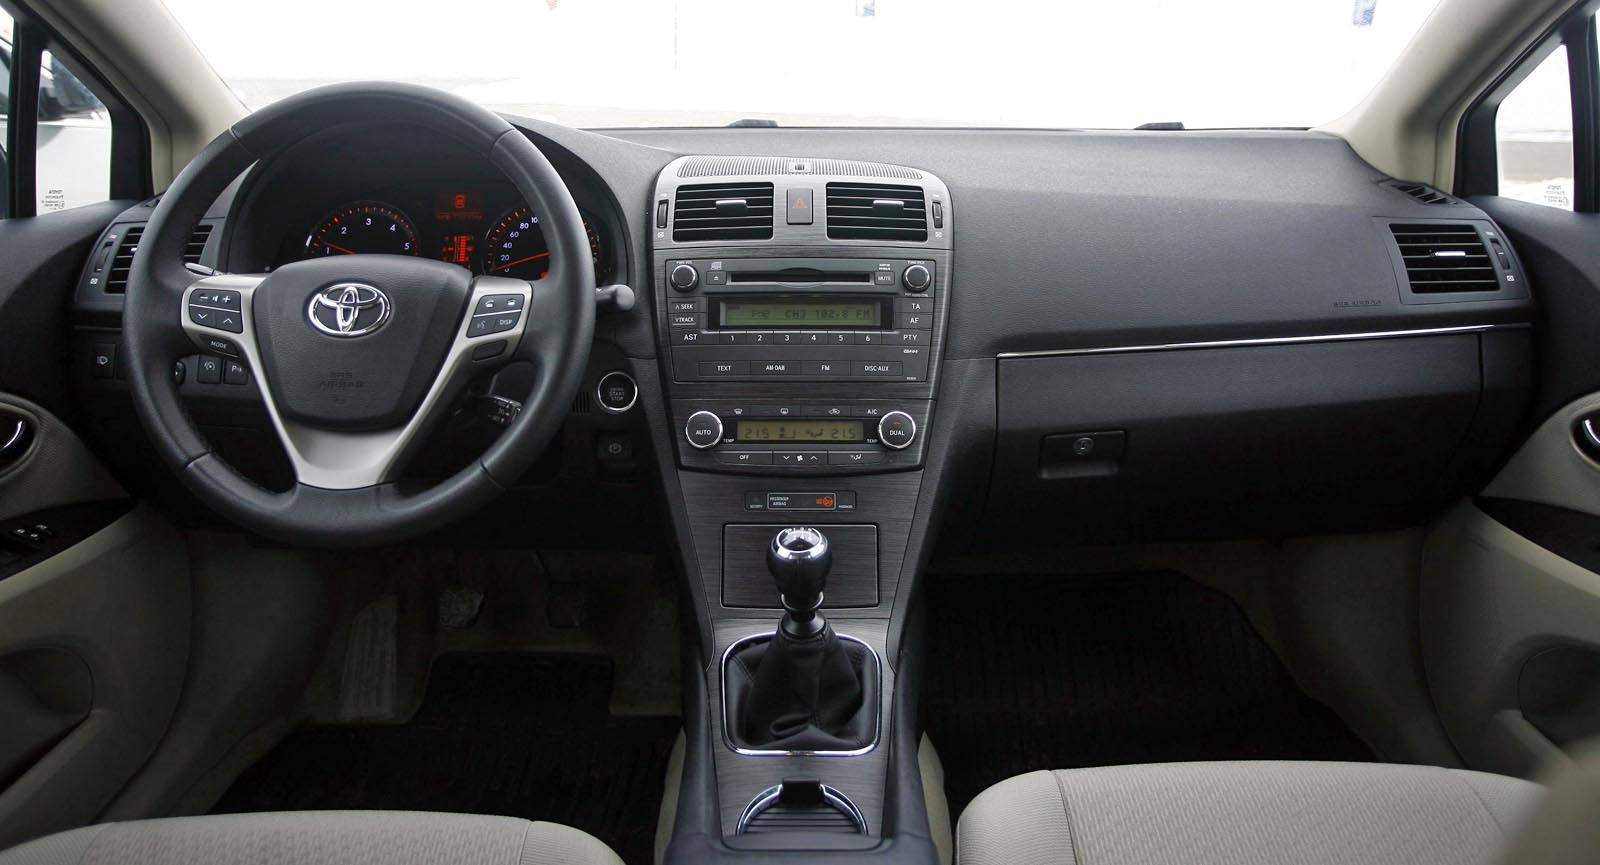 Toyota Avensis, in echipare Elegance, are un interior clasic, elegant si bine finisat